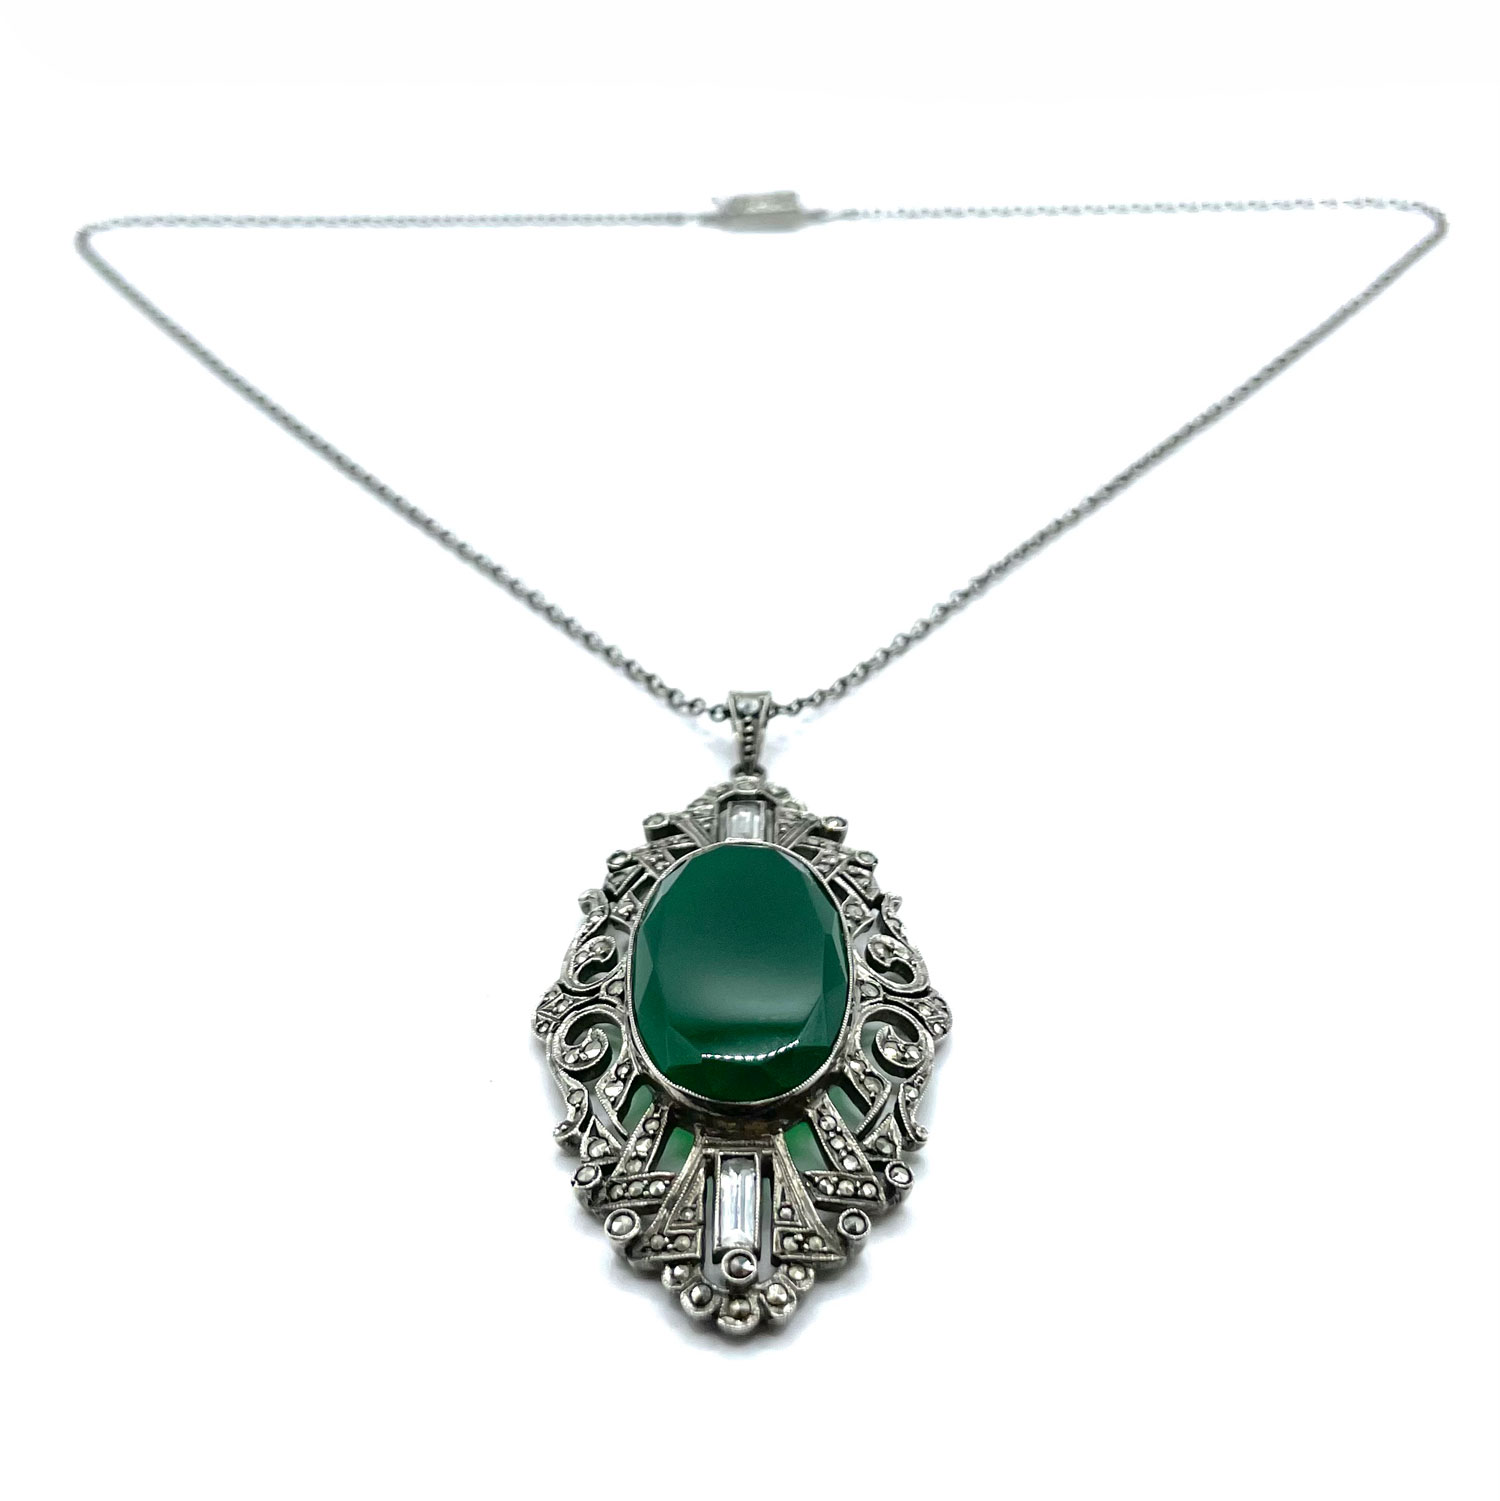 1920s Art Deco chrysoprase necklace